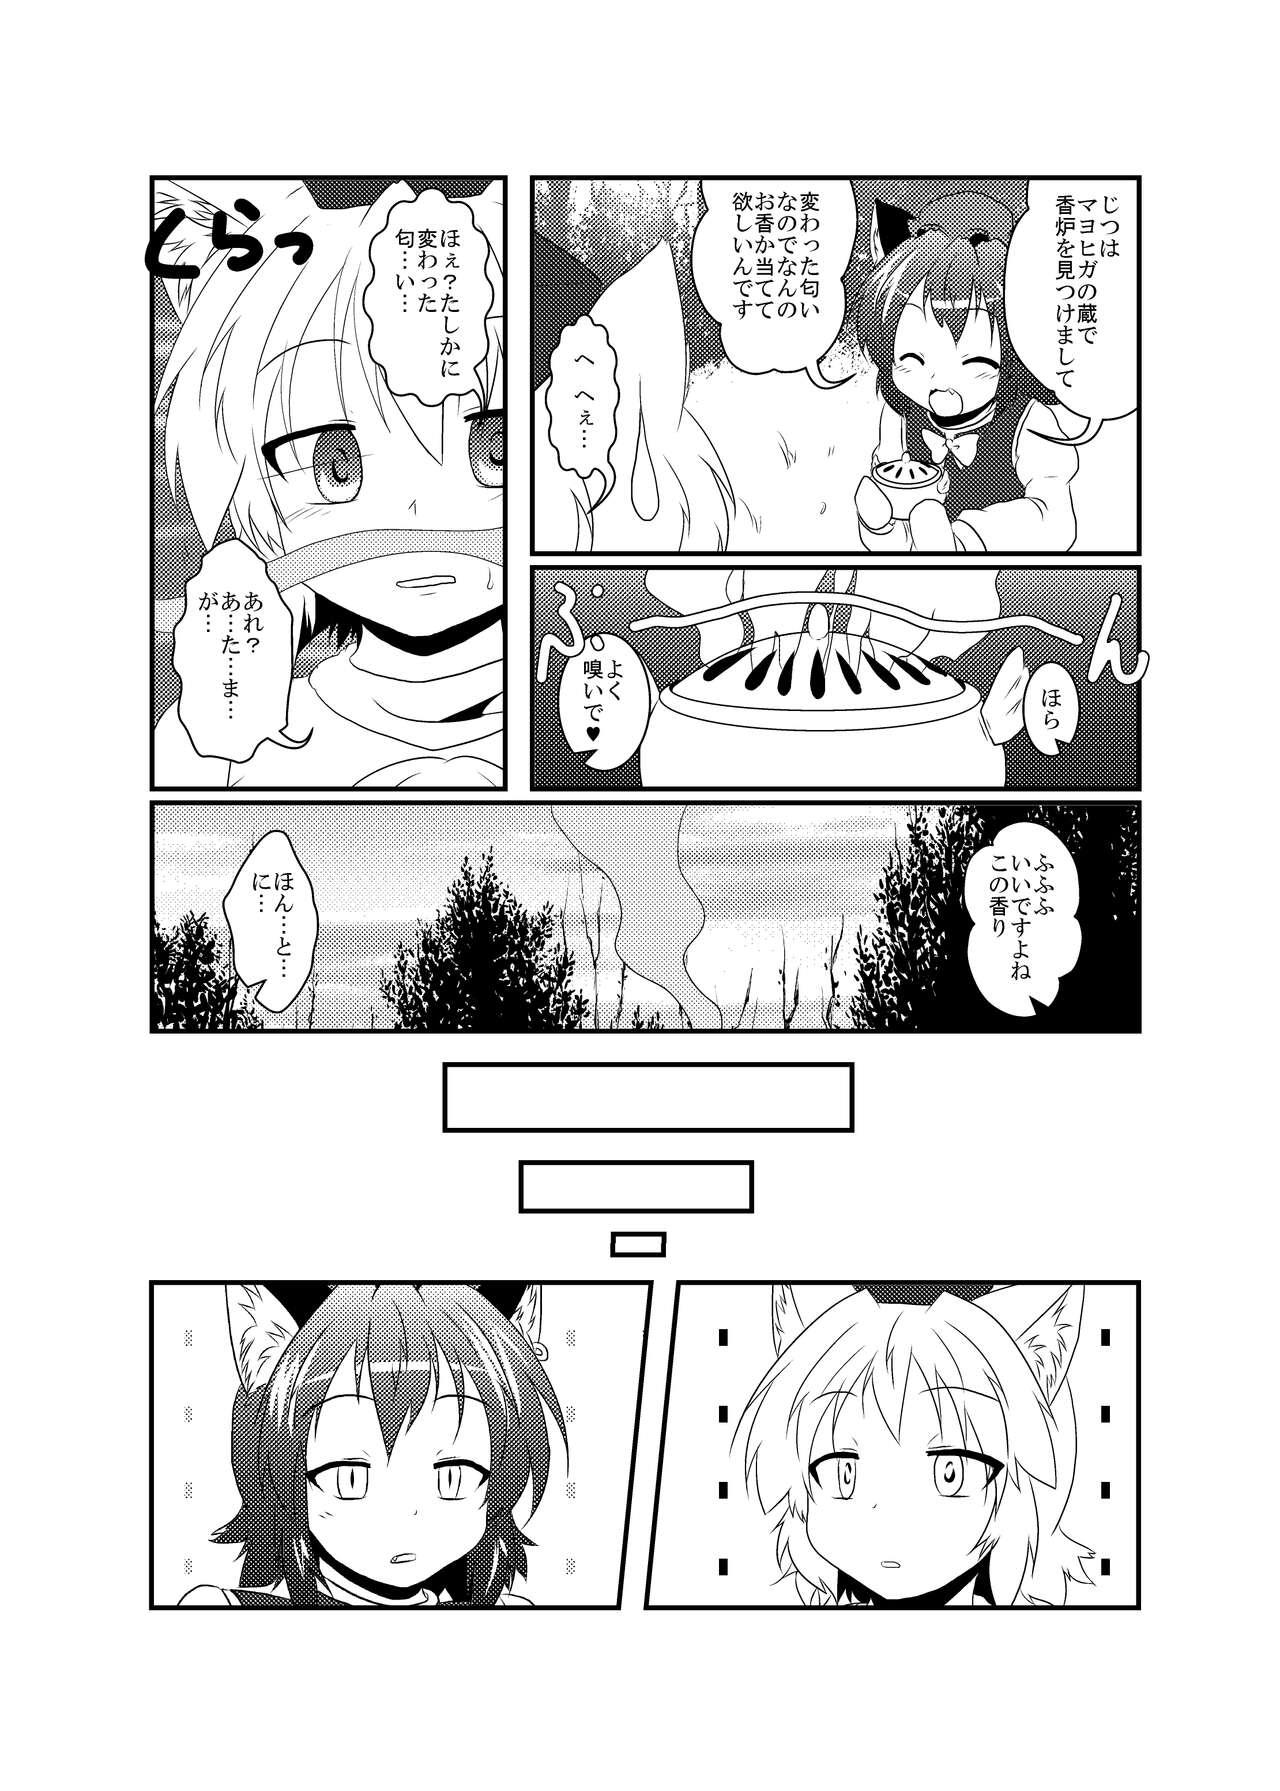 Friend Momiji "Nyan" Chen "Wan" - Touhou project Doublepenetration - Page 4